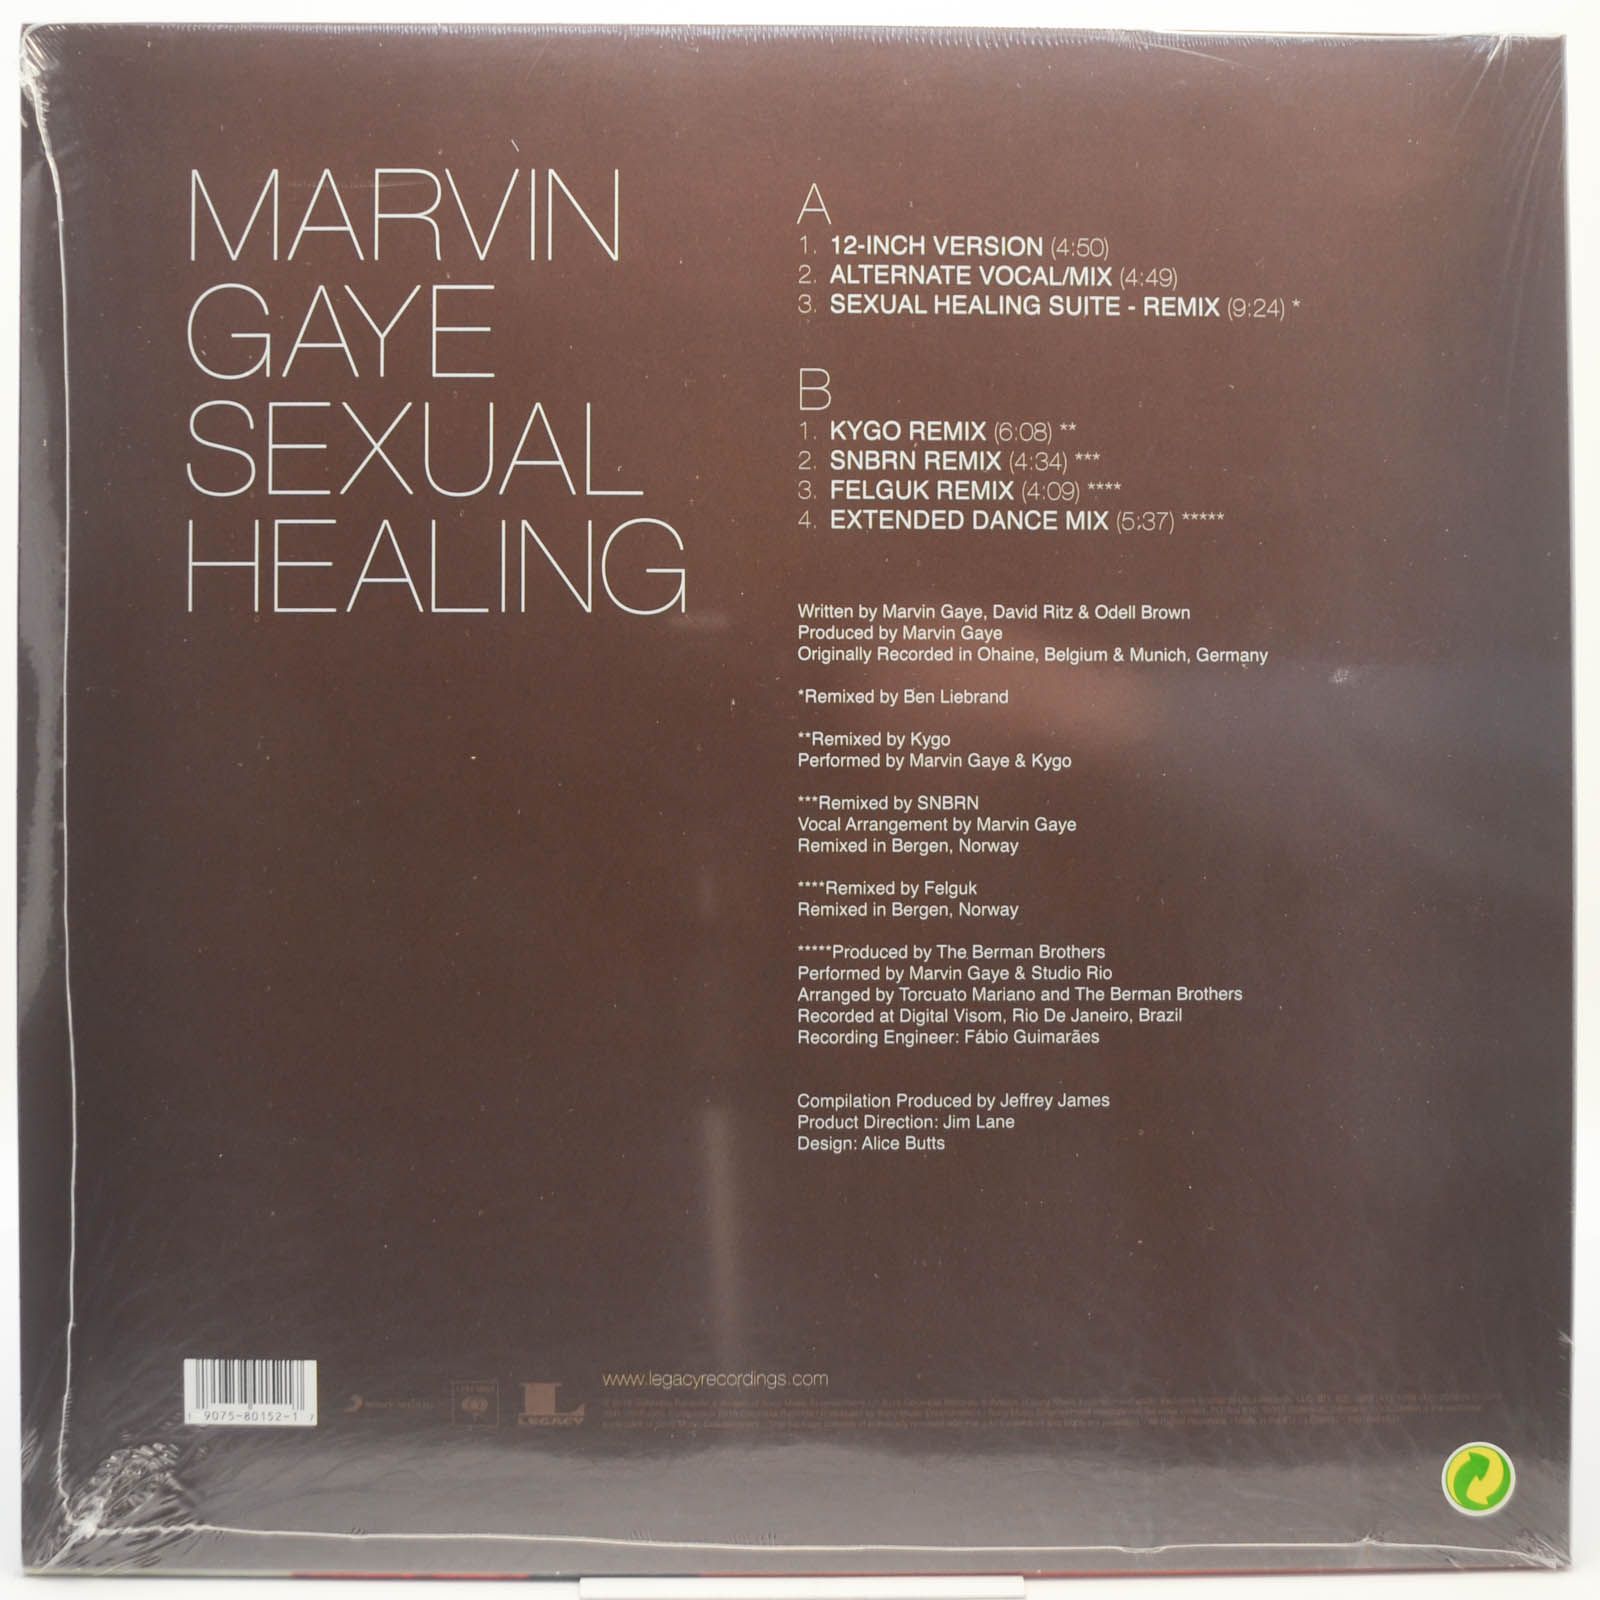 Marvin Gaye — Sexual Healing - The Remixes, 2018